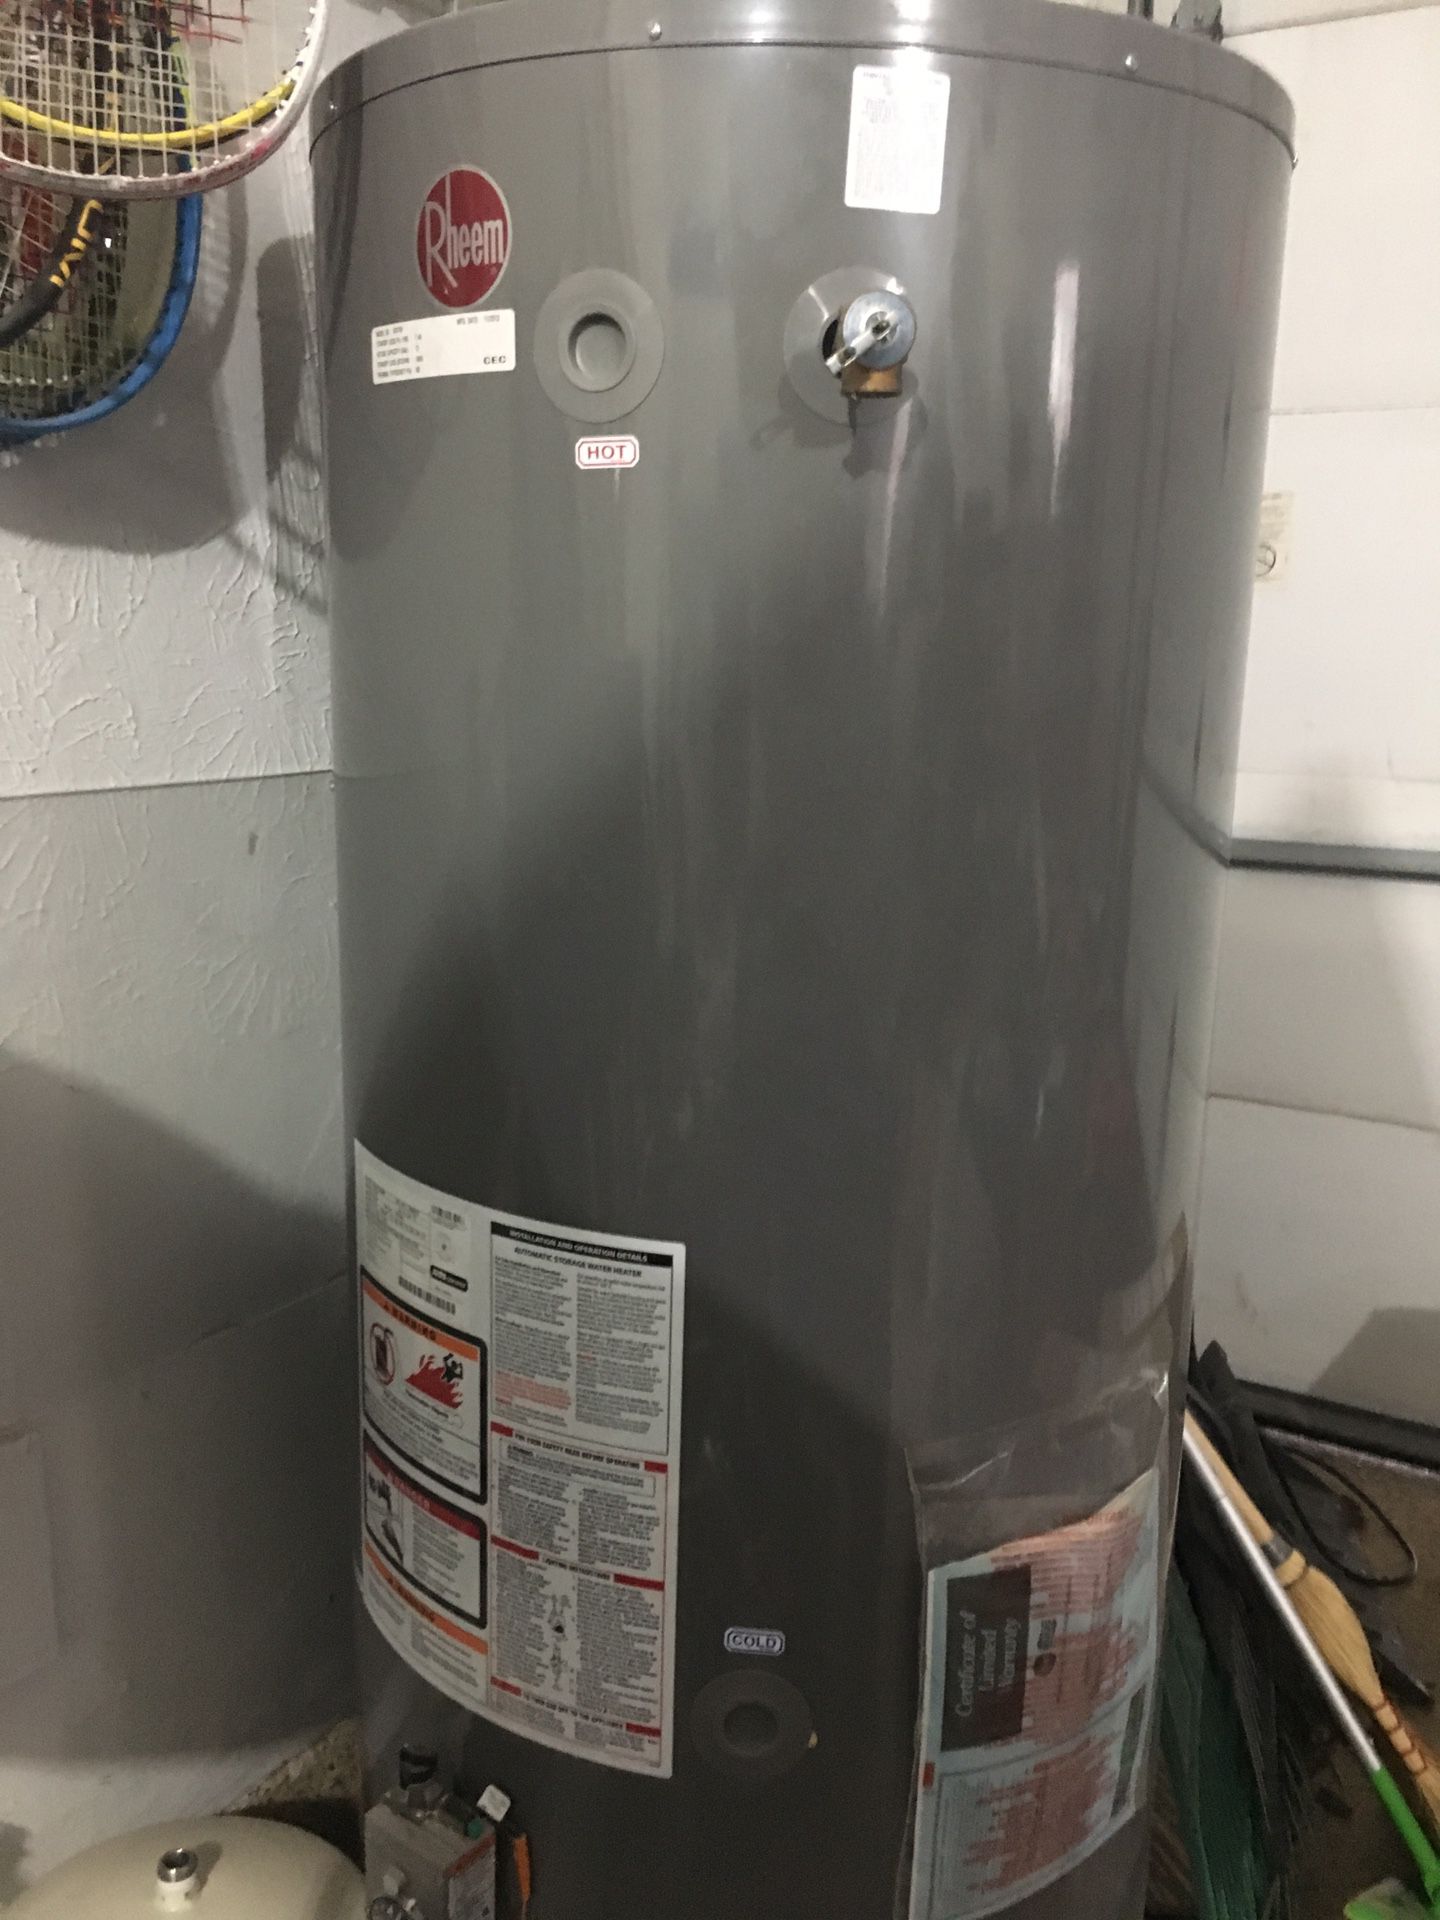 2013 75 gallon Rheem water heater